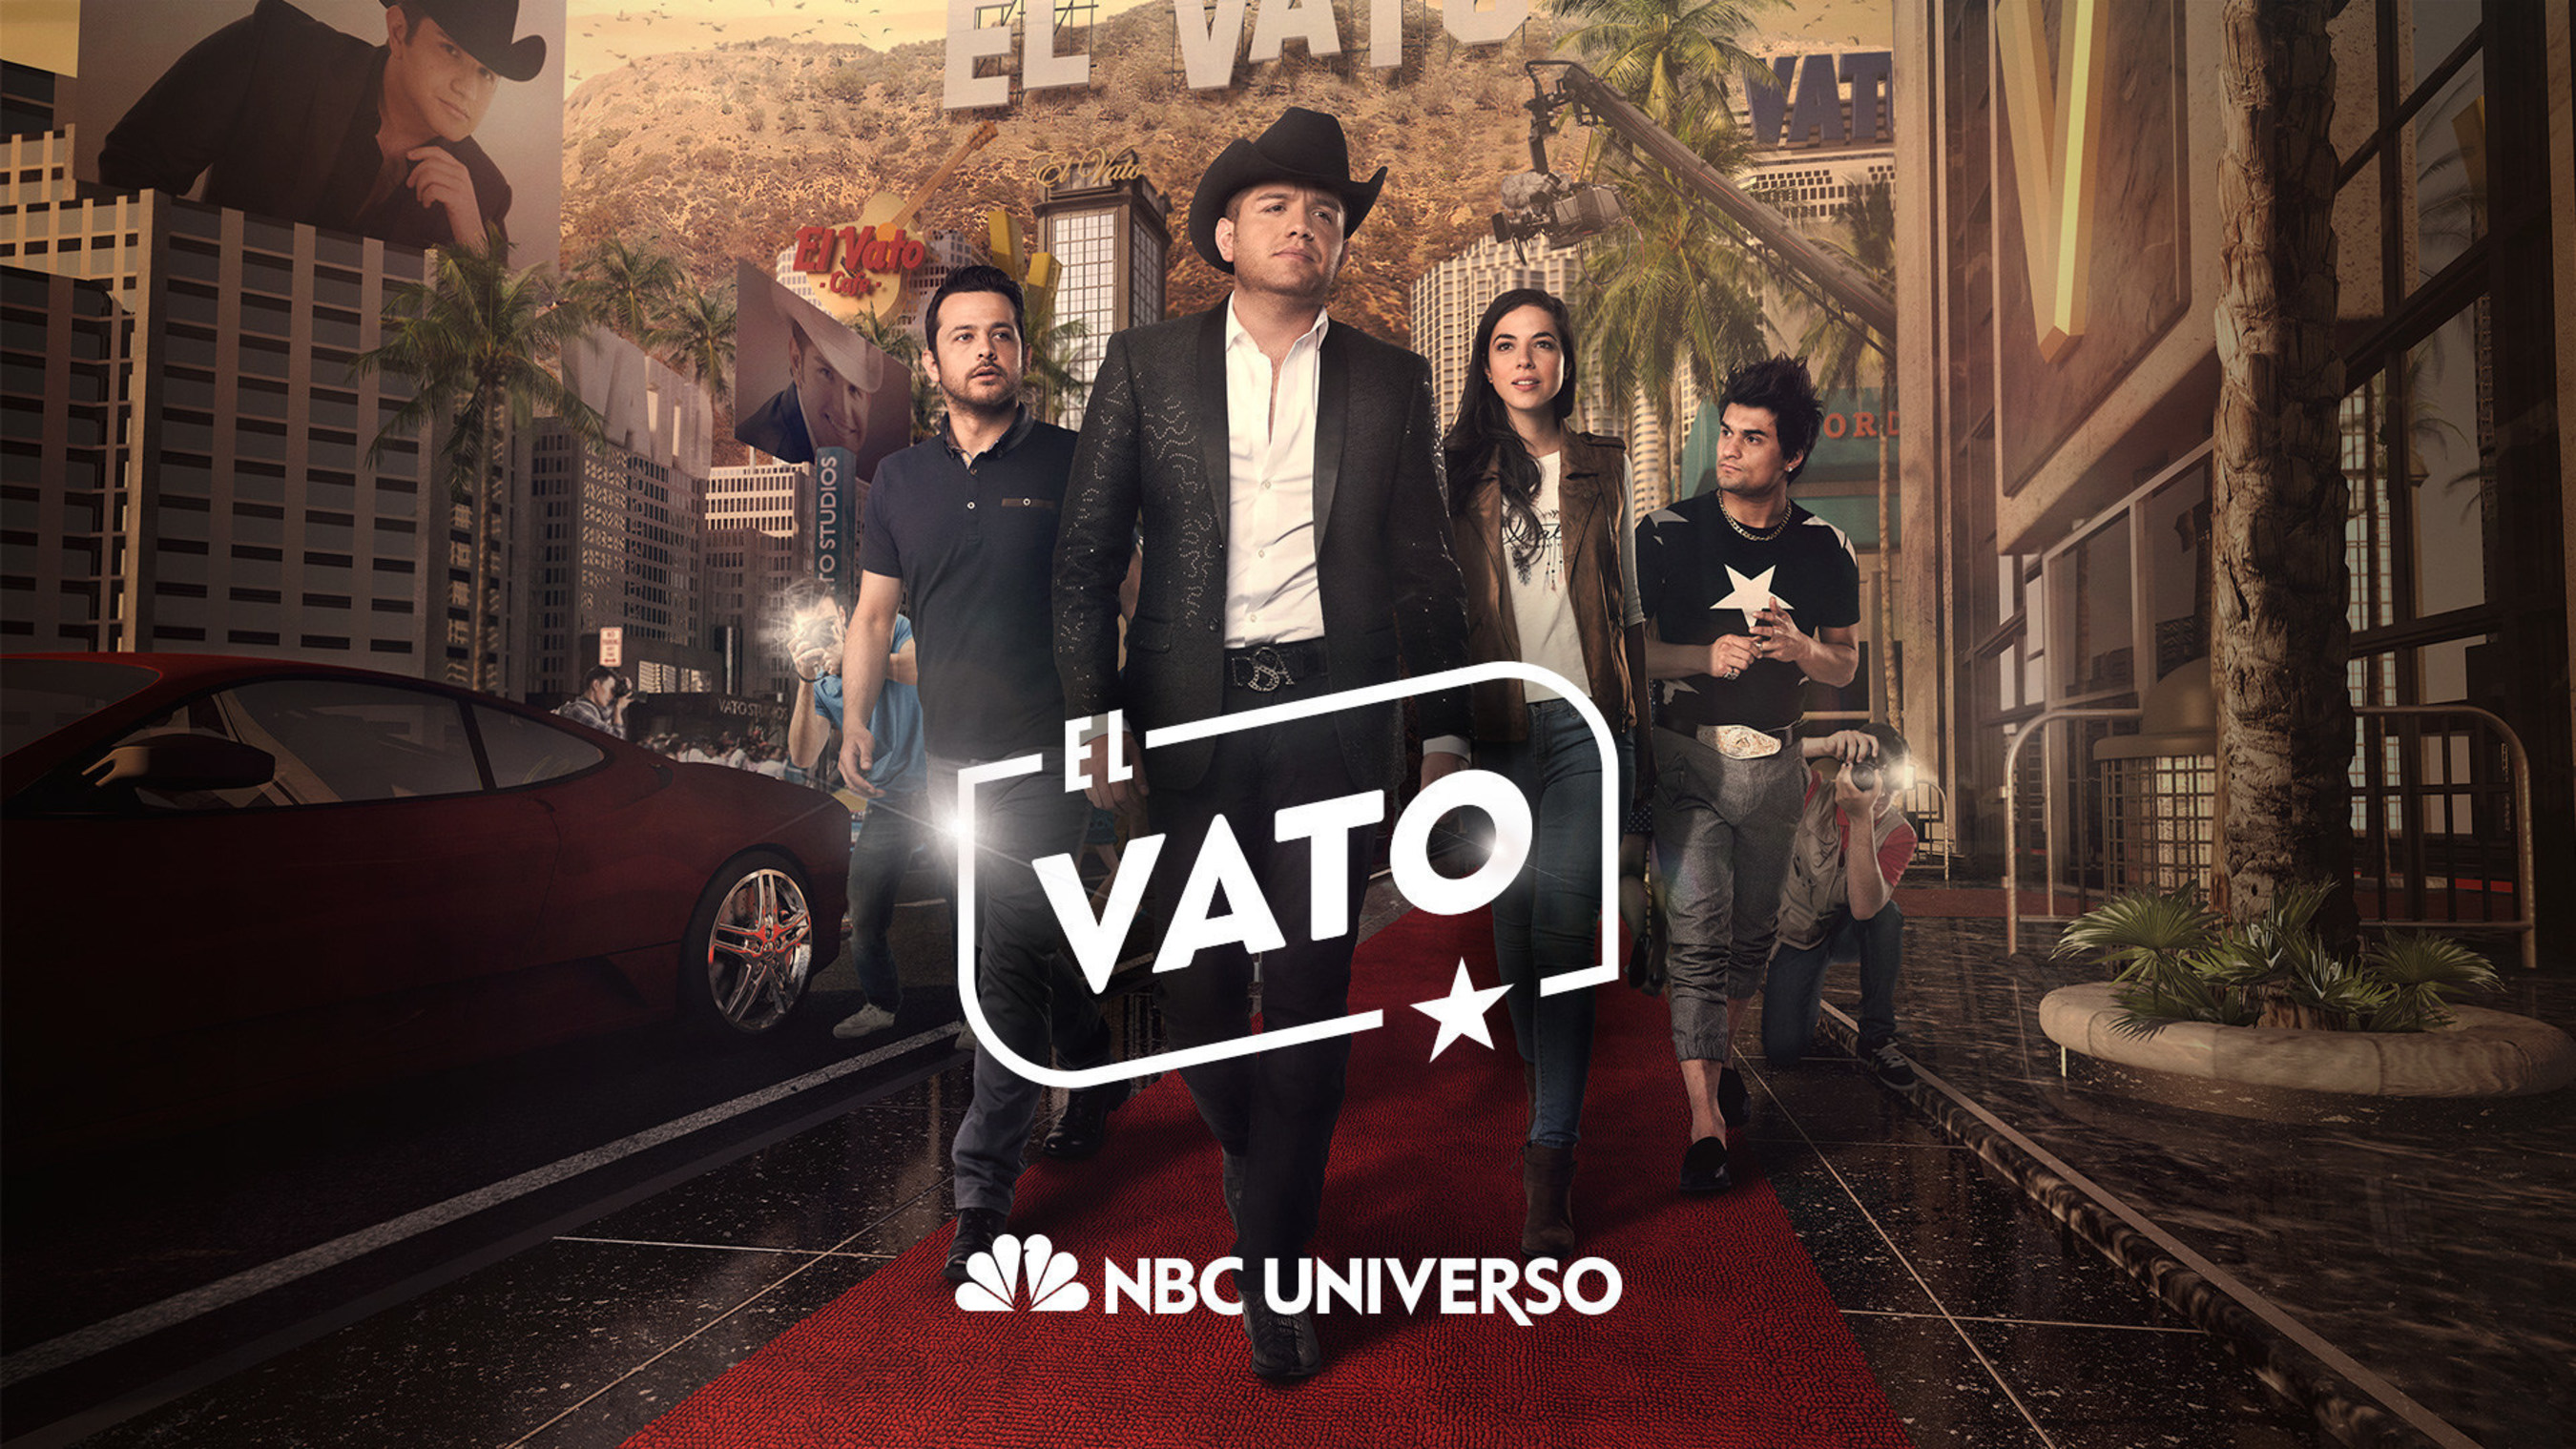 Cast of "El Vato" NBC UNIVERSO's original scripted series starring El Dasa, Cristina Rodlo Gustavo Egelhaaf and Ricardo Polanco